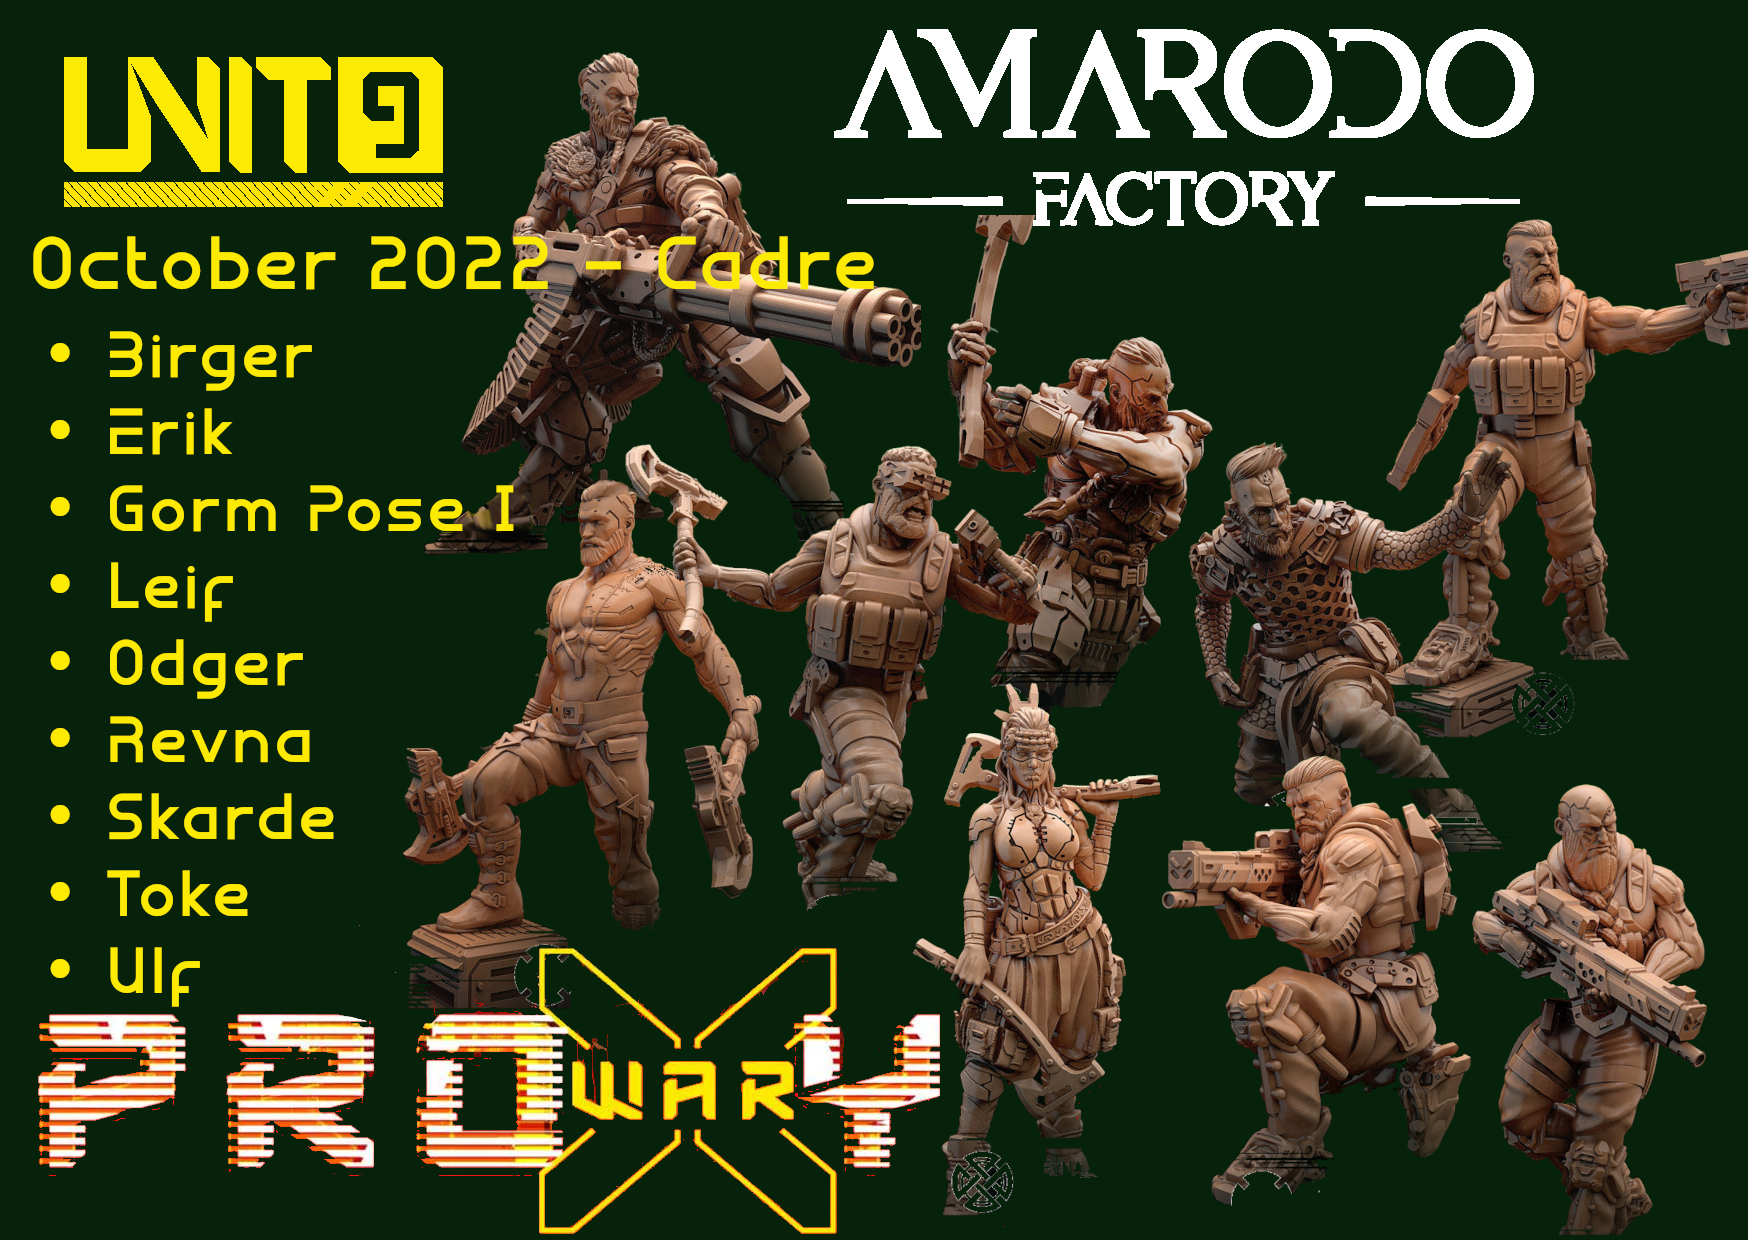 Raiders of Ymir Proxy Wars Team - Oktober 2022 Unit9 Kader